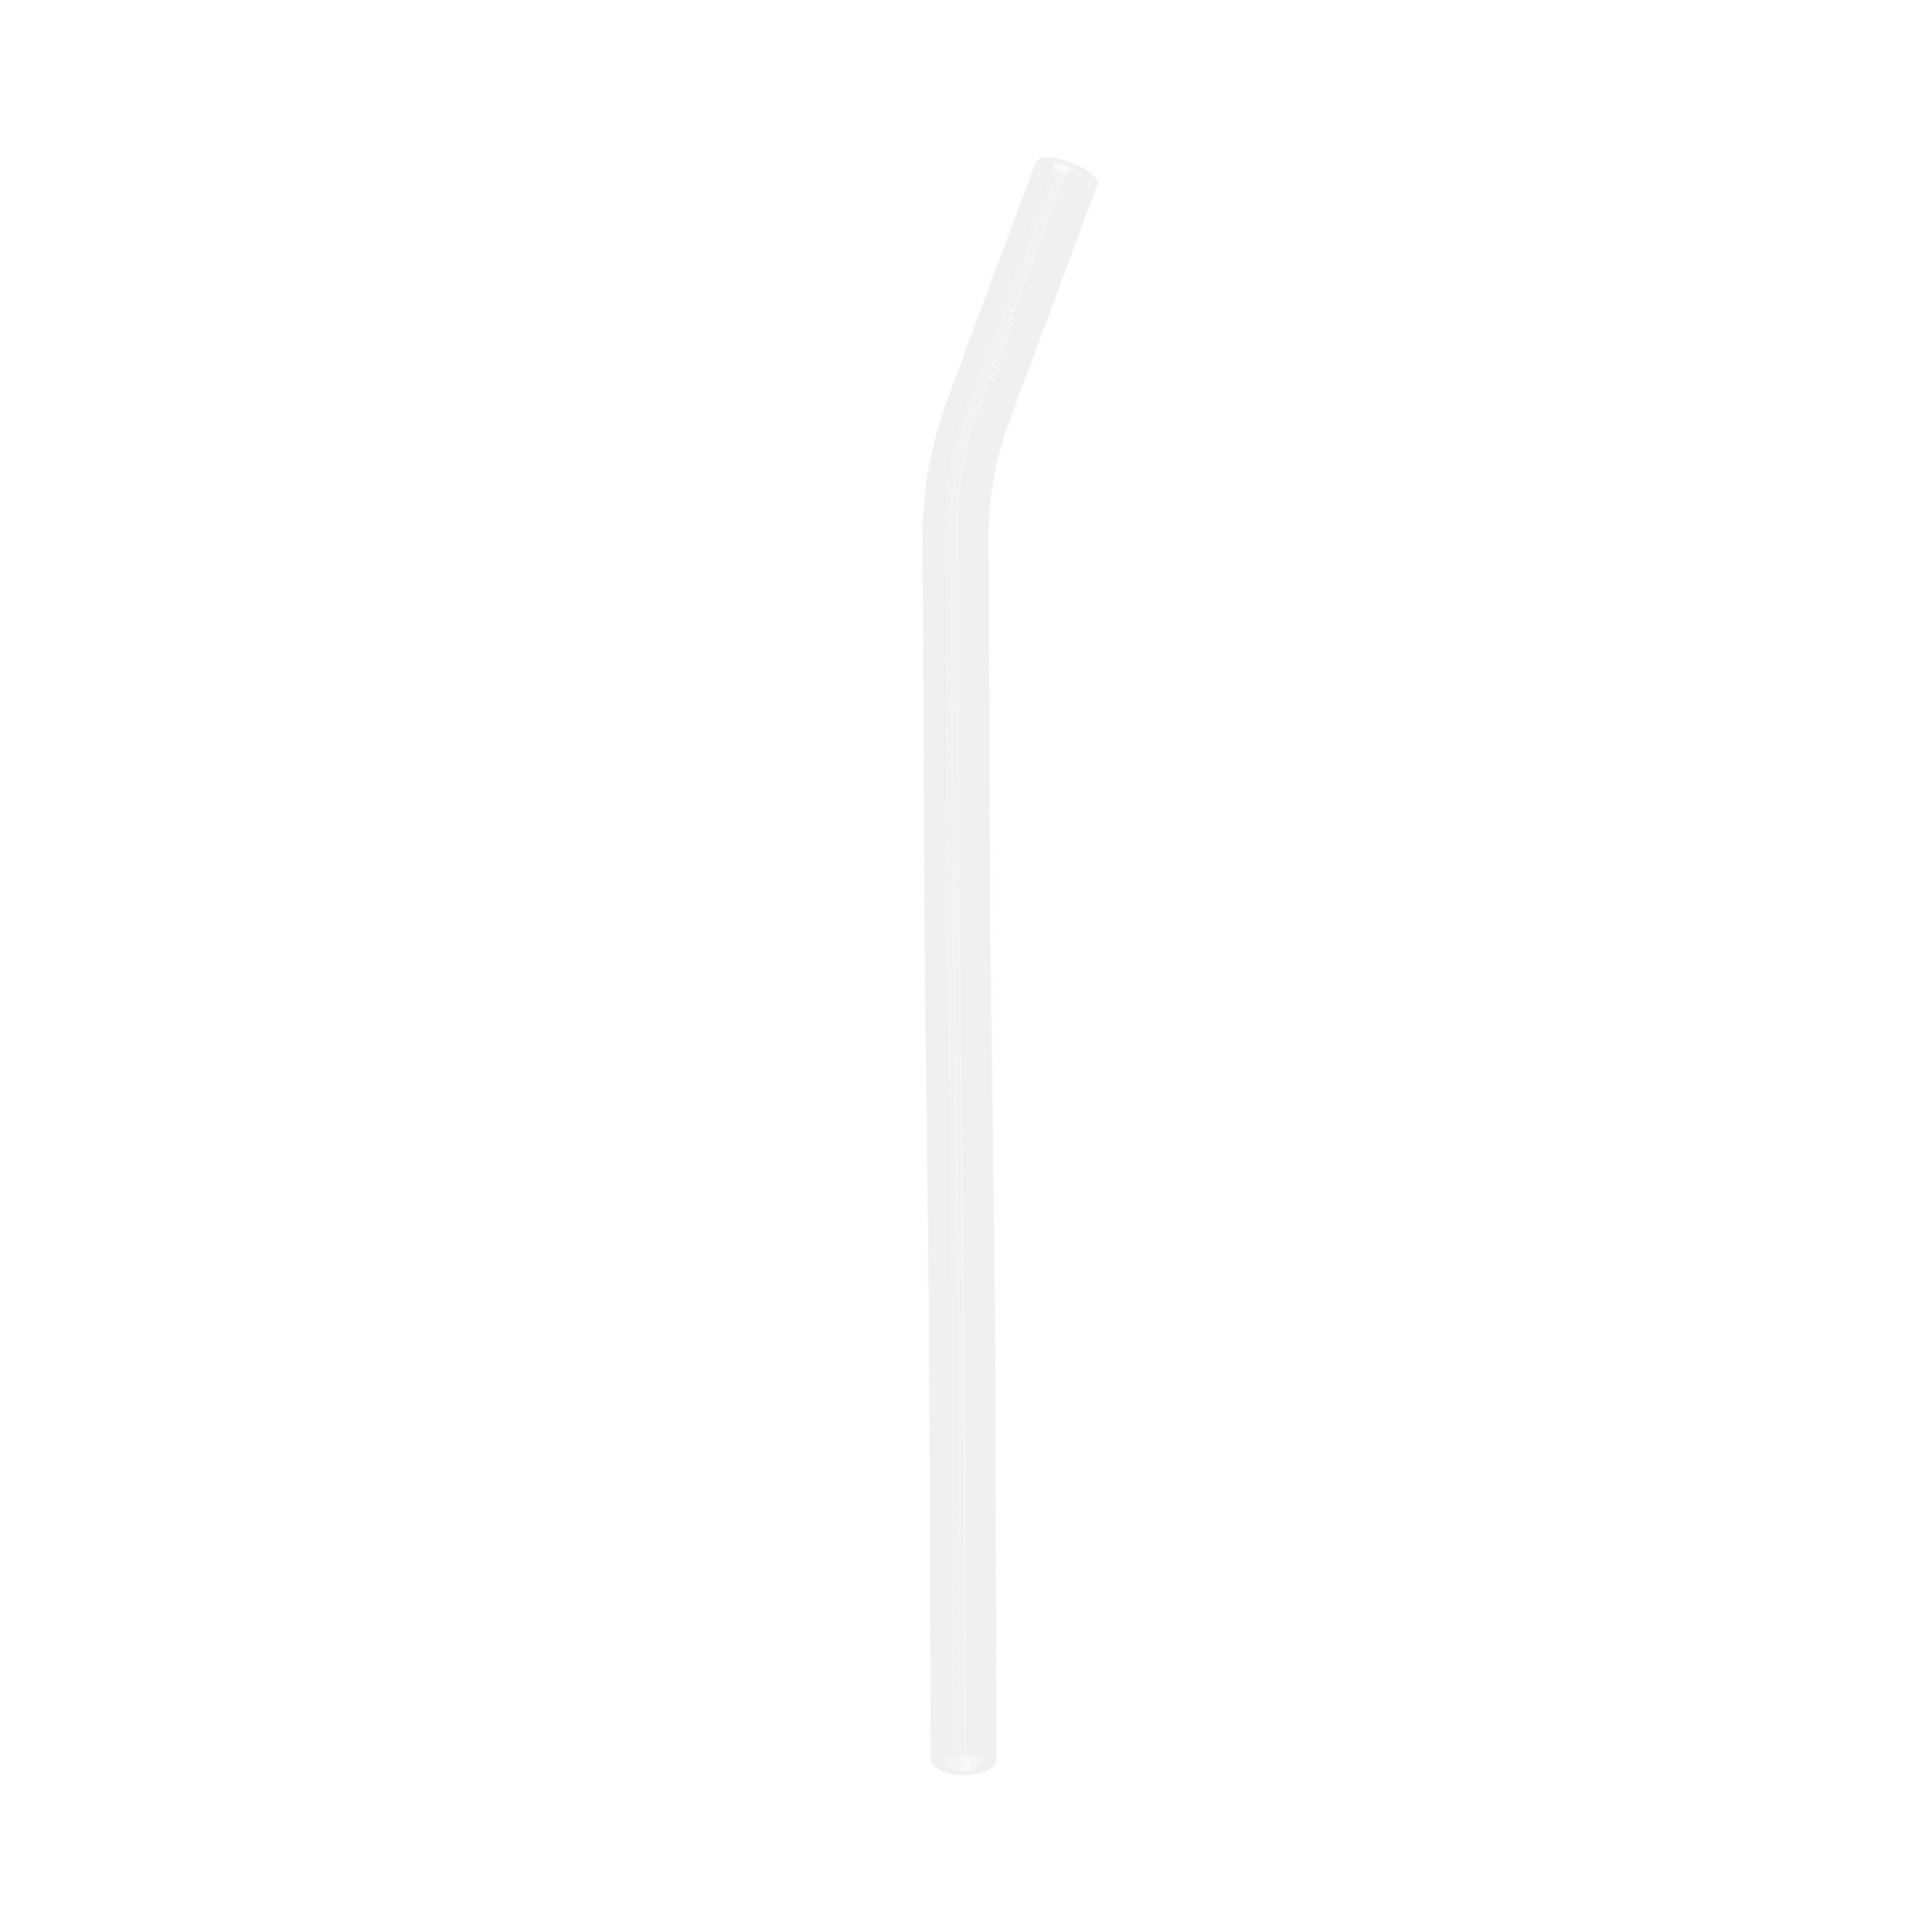 Glass Straws, Mermaid Straw, Reusable Straw, white glass curved single